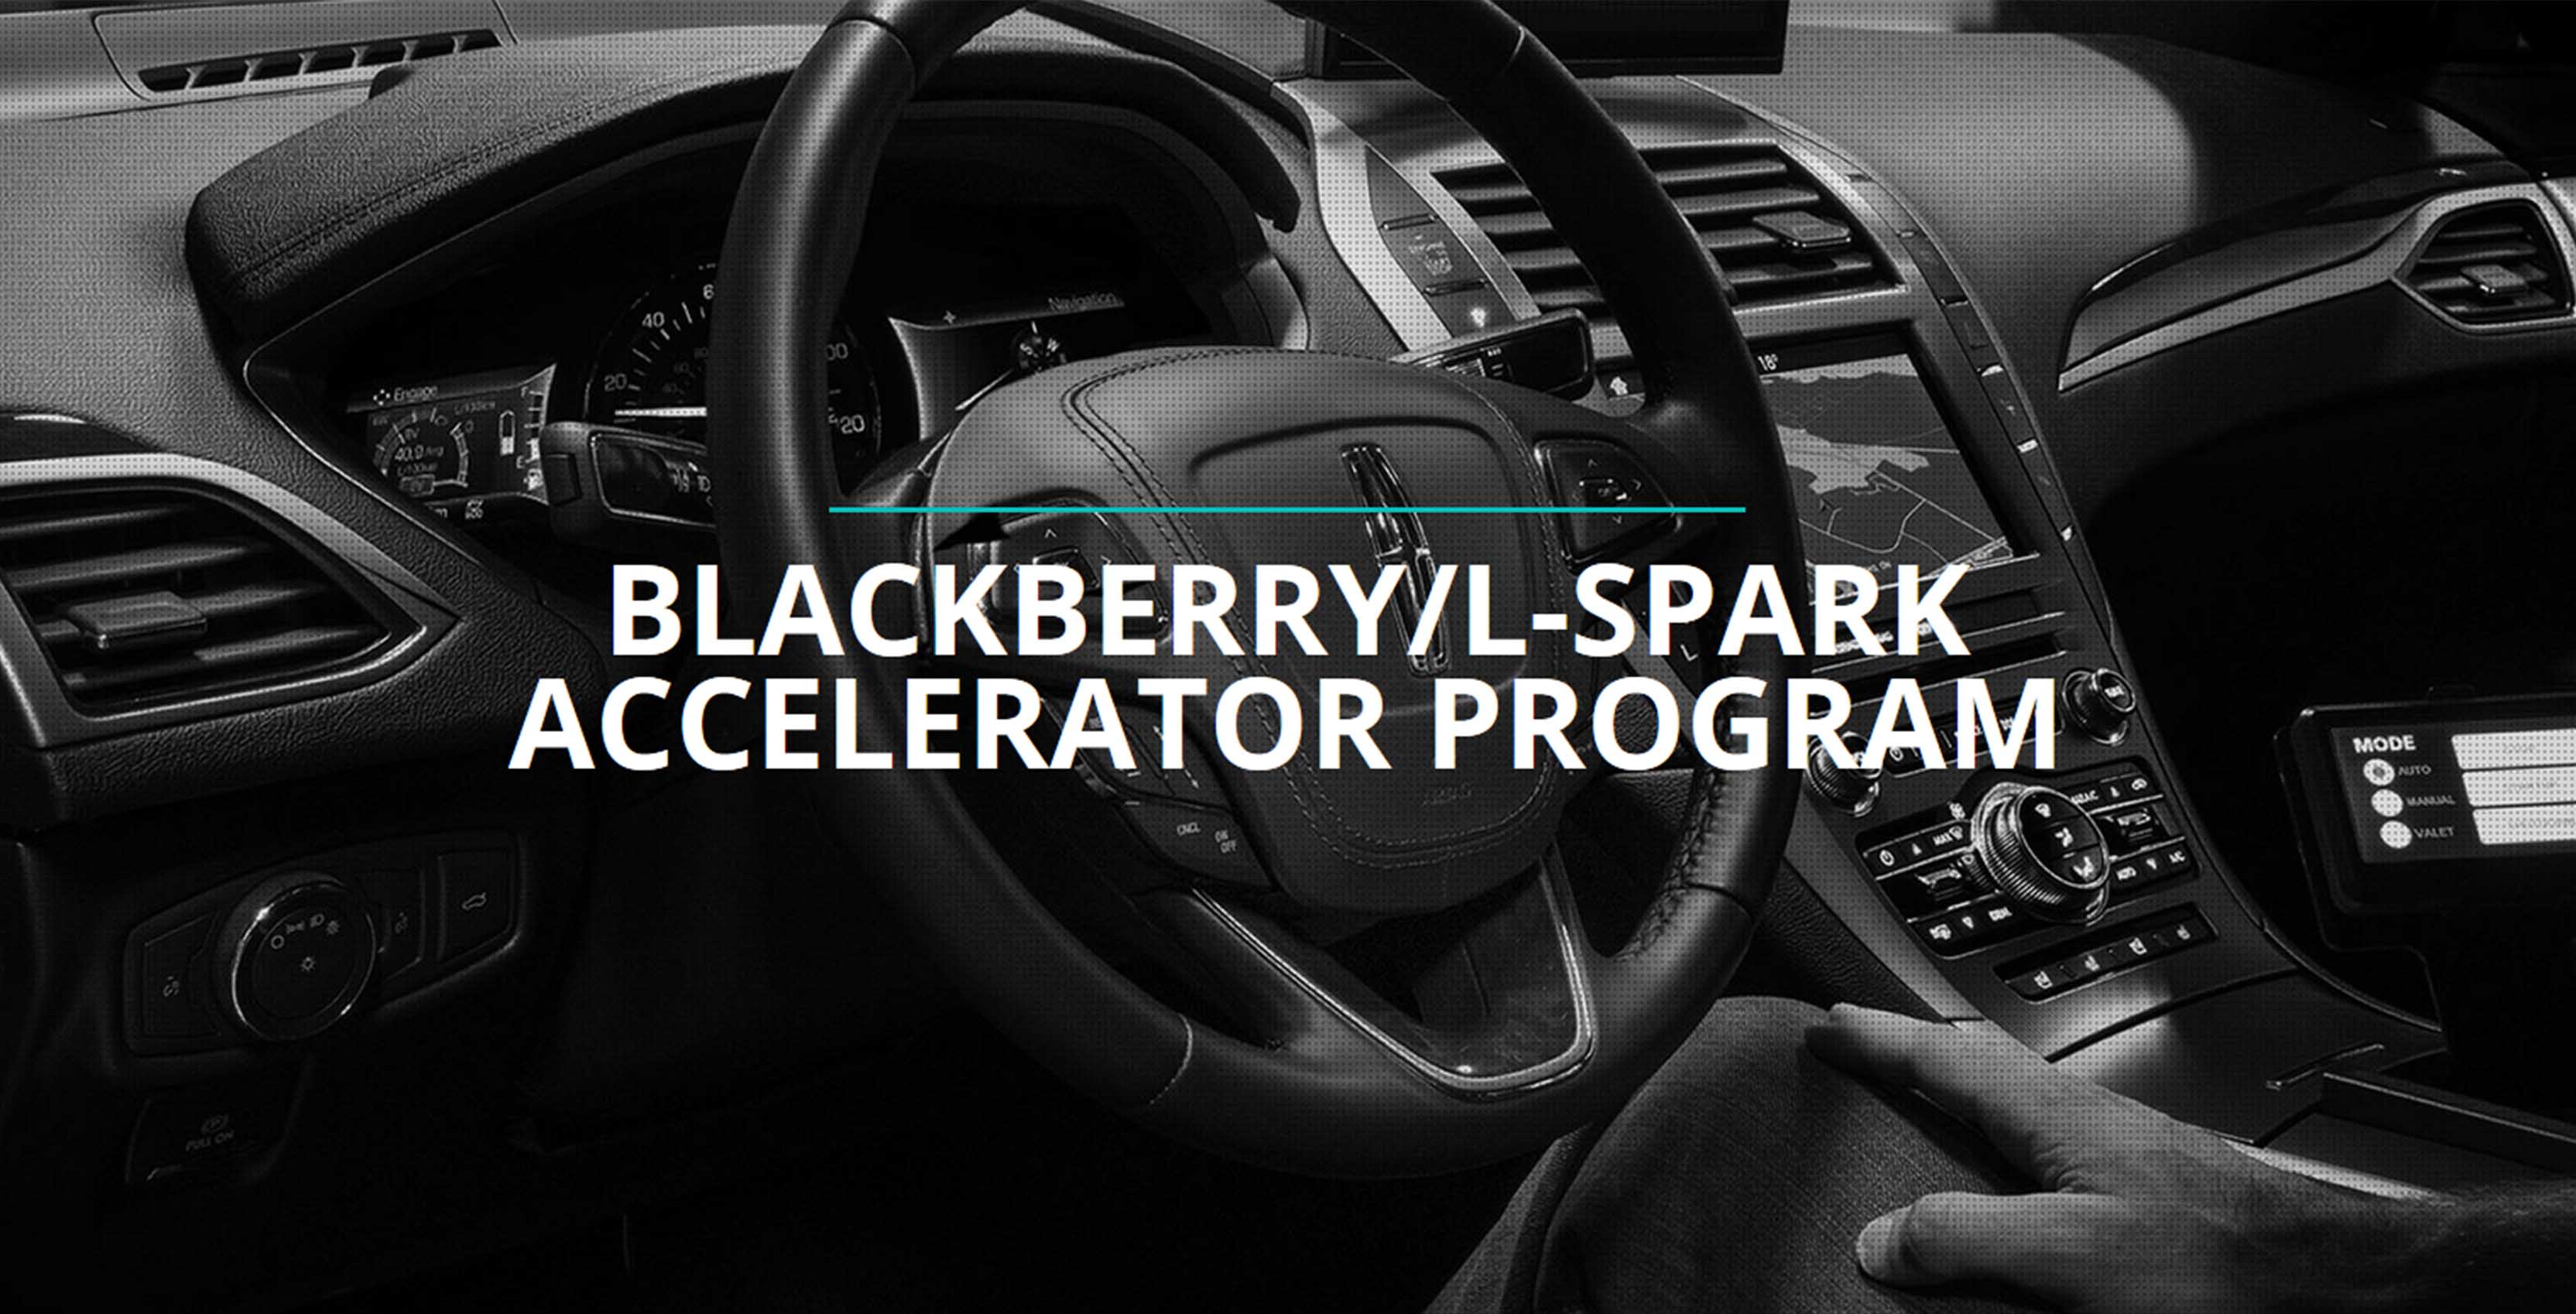 BlackBerry and L-Spark accelerator program